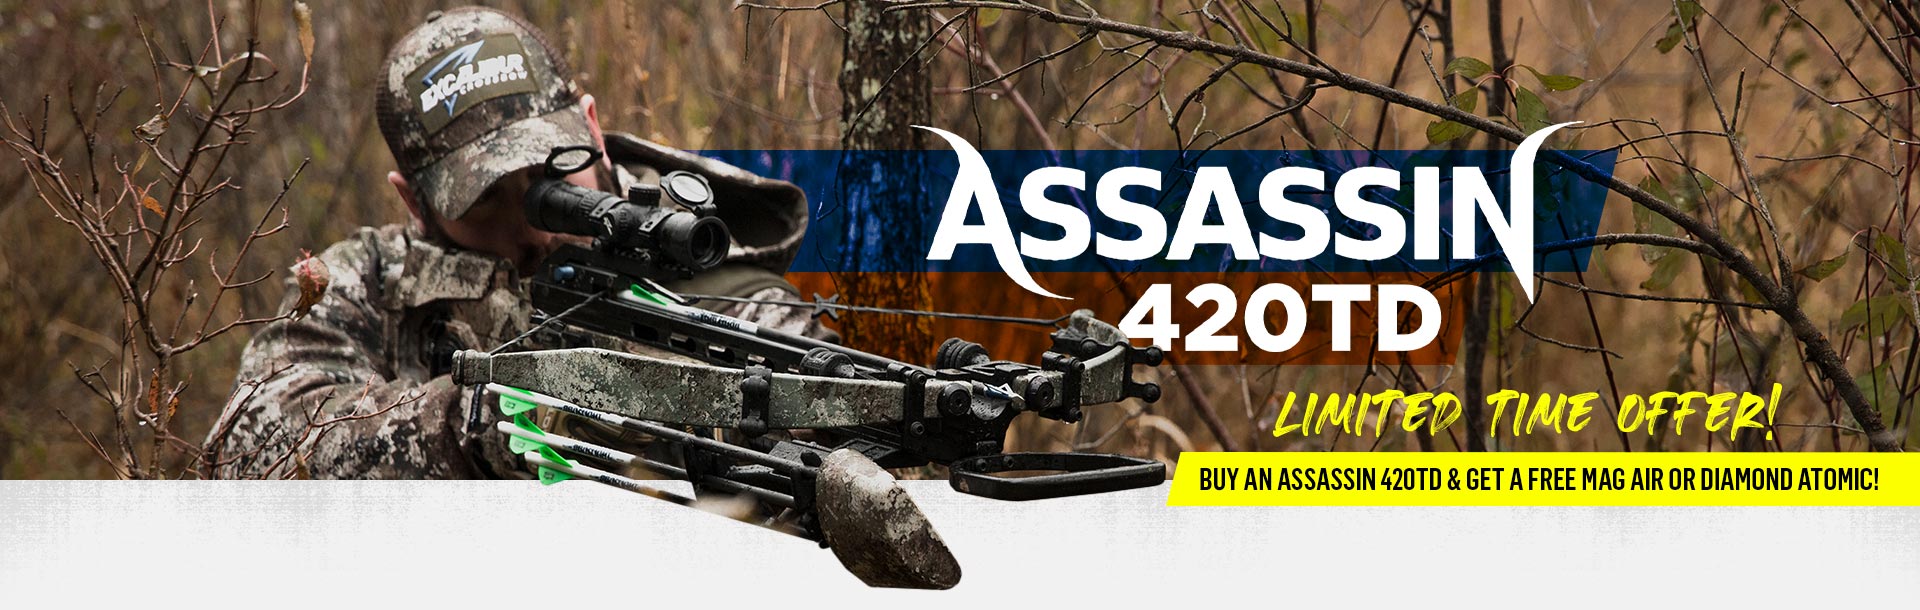 Assassin 420 TD bogo promo banner